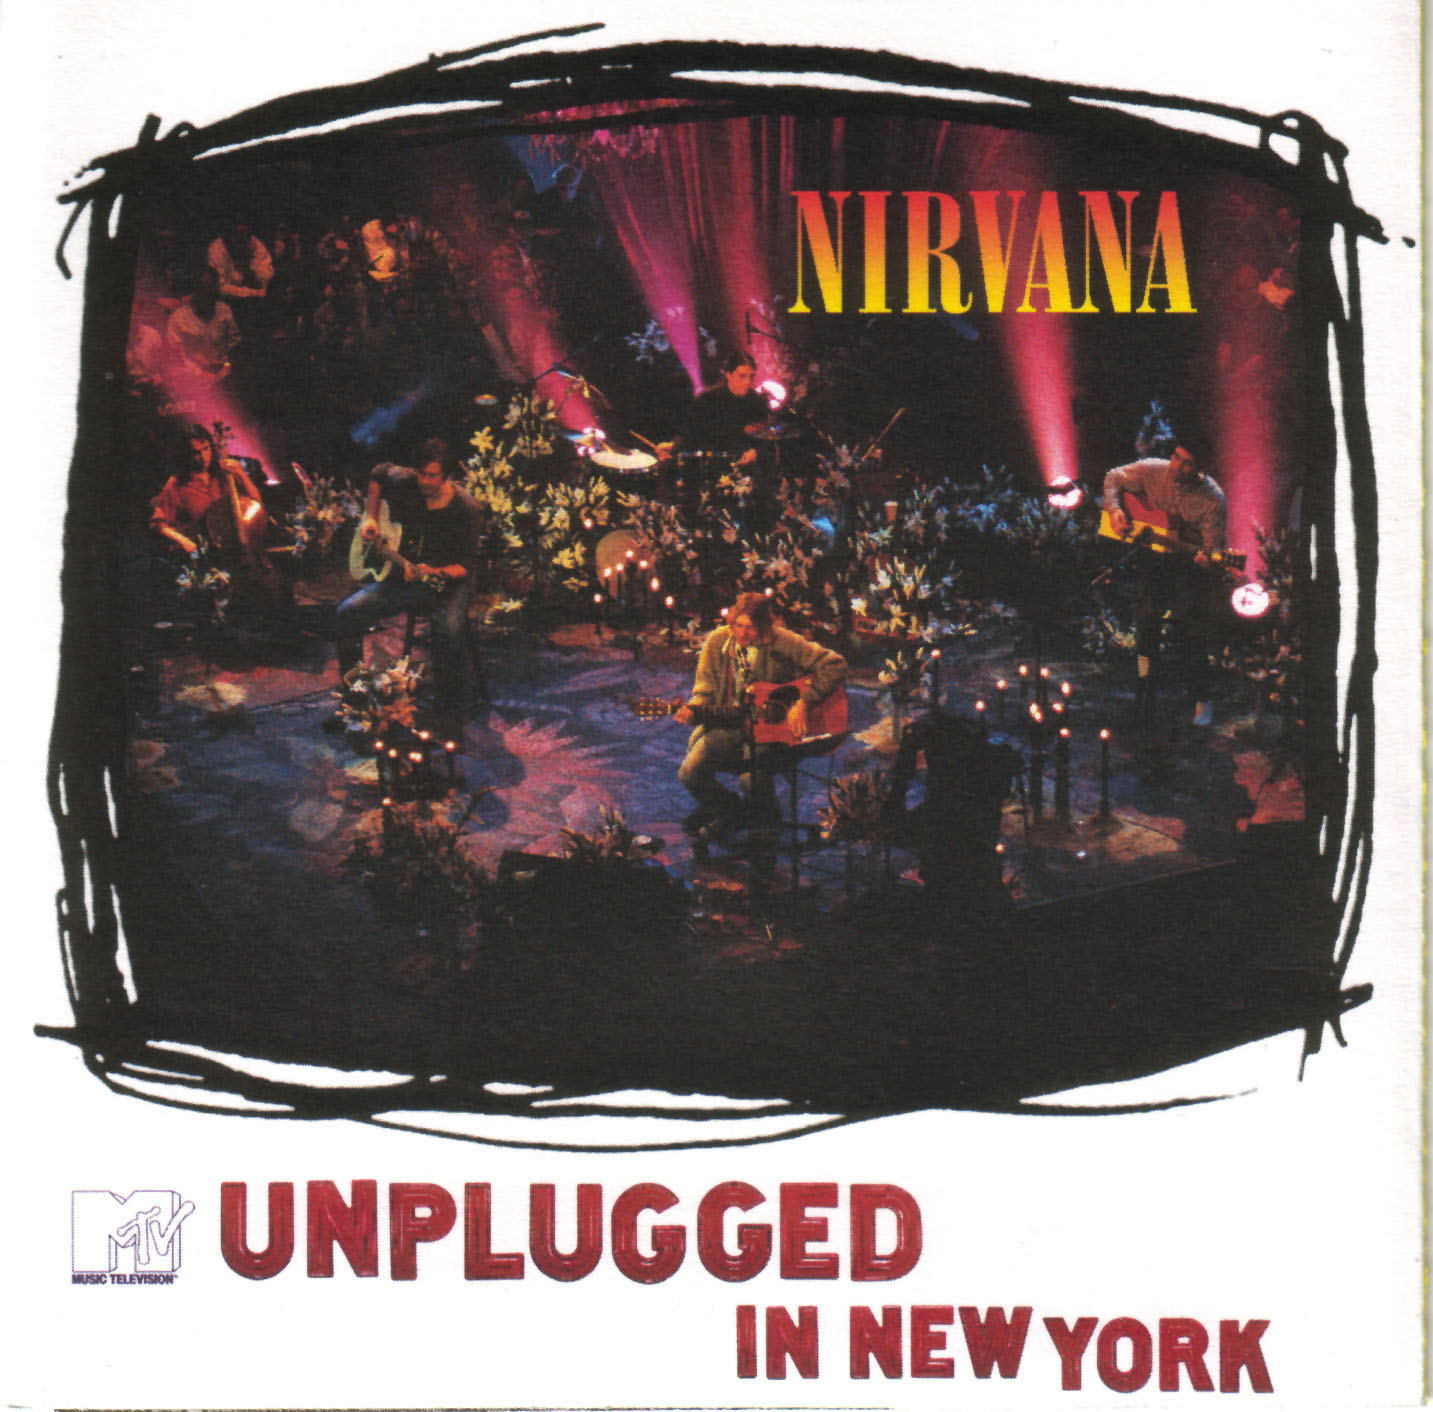 http://4.bp.blogspot.com/_eCvZQMlpil4/SwZTgbKuWOI/AAAAAAAAAj4/lKEXVsEr8jQ/s1600/Nirvana-Unplugged_In_New_York-Frontal.jpg